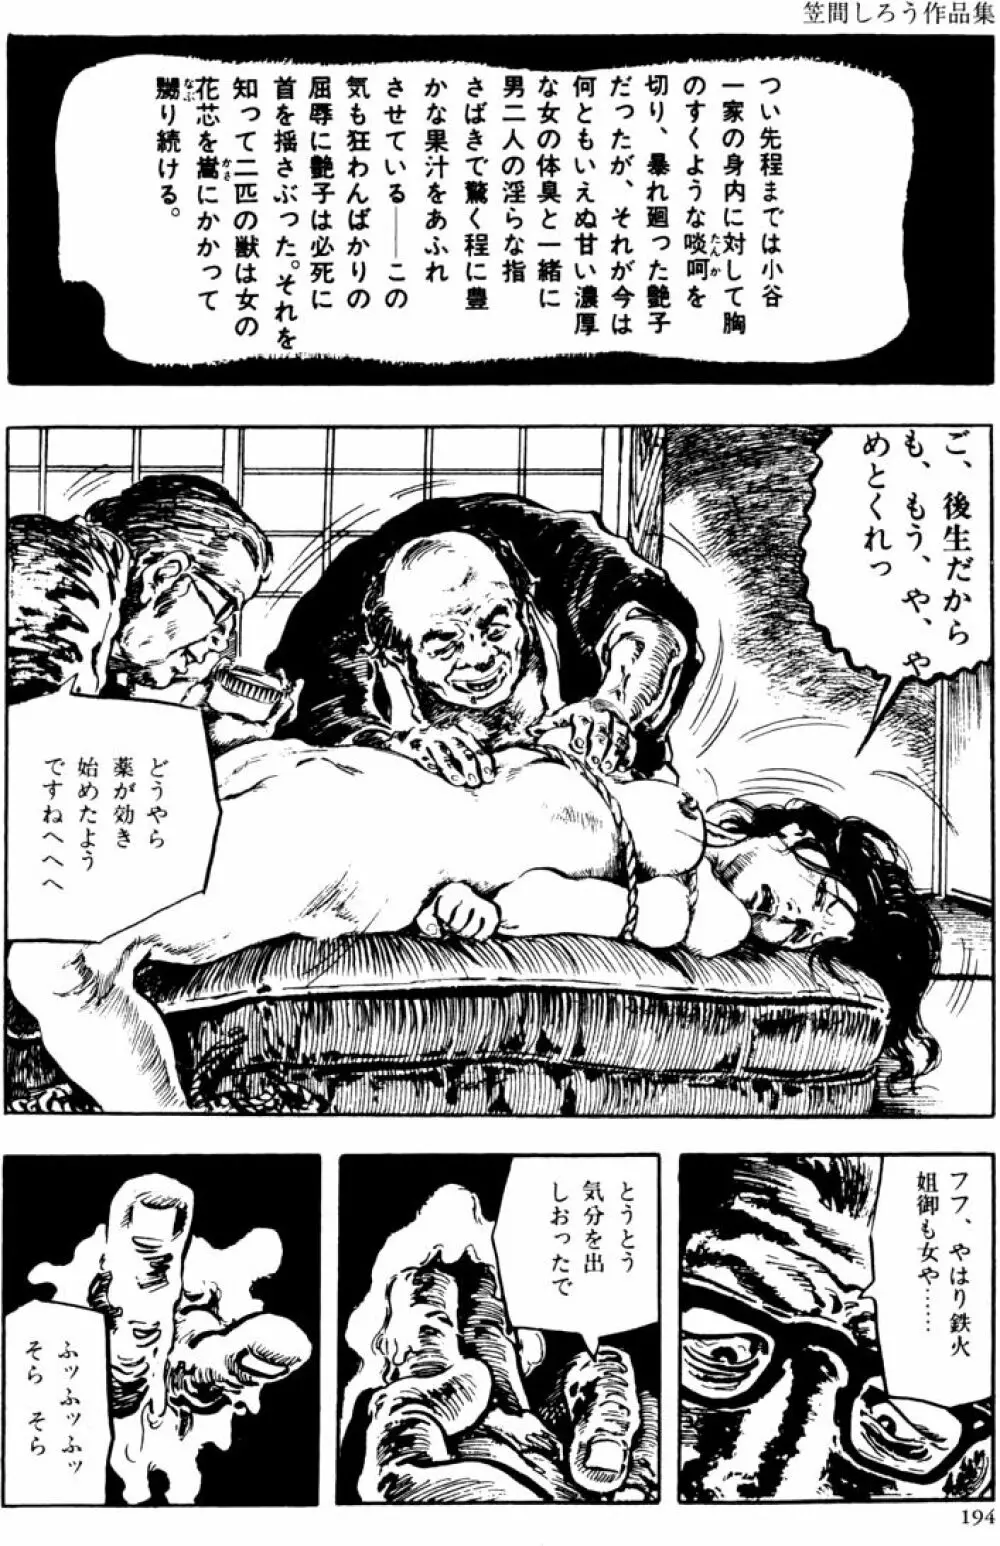 団鬼六原作劇画集成2 163ページ